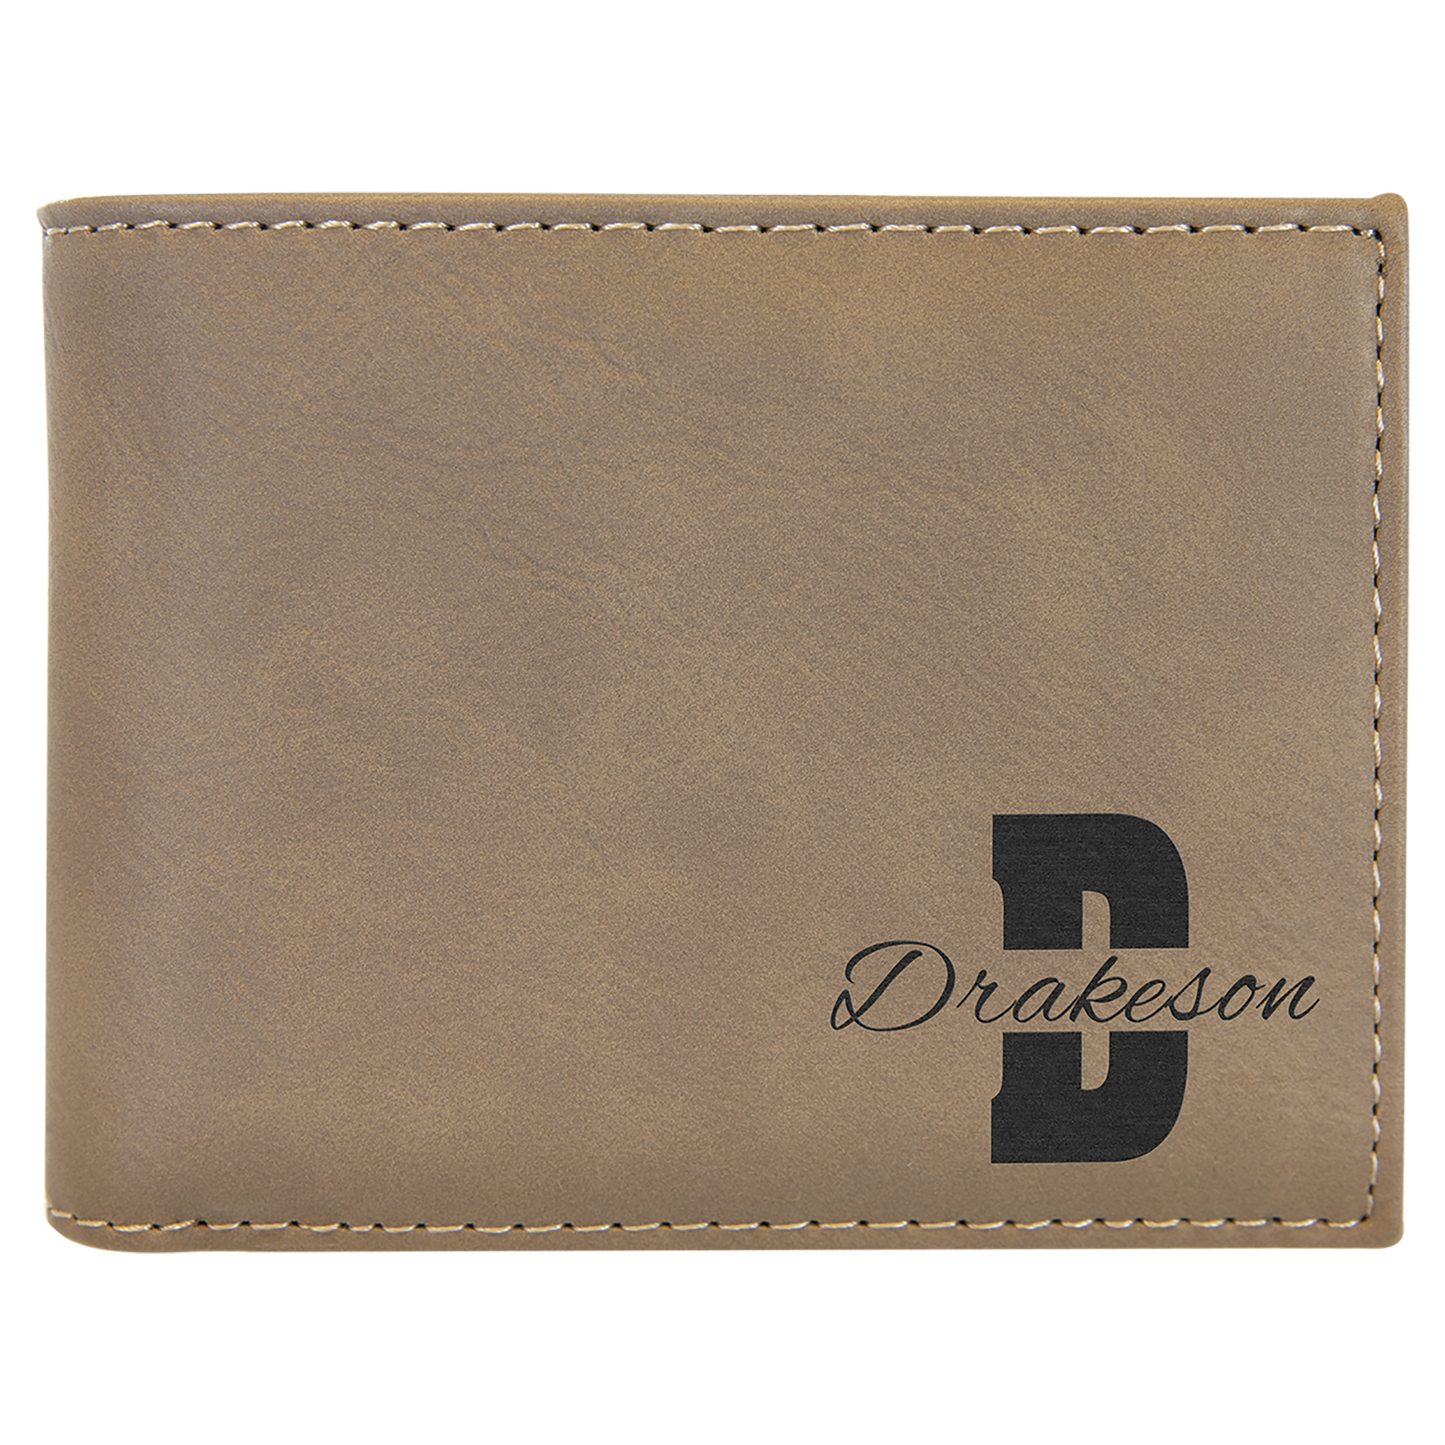 Light Brown Leatherette Bi-Fold Wallet w/Flip ID Display